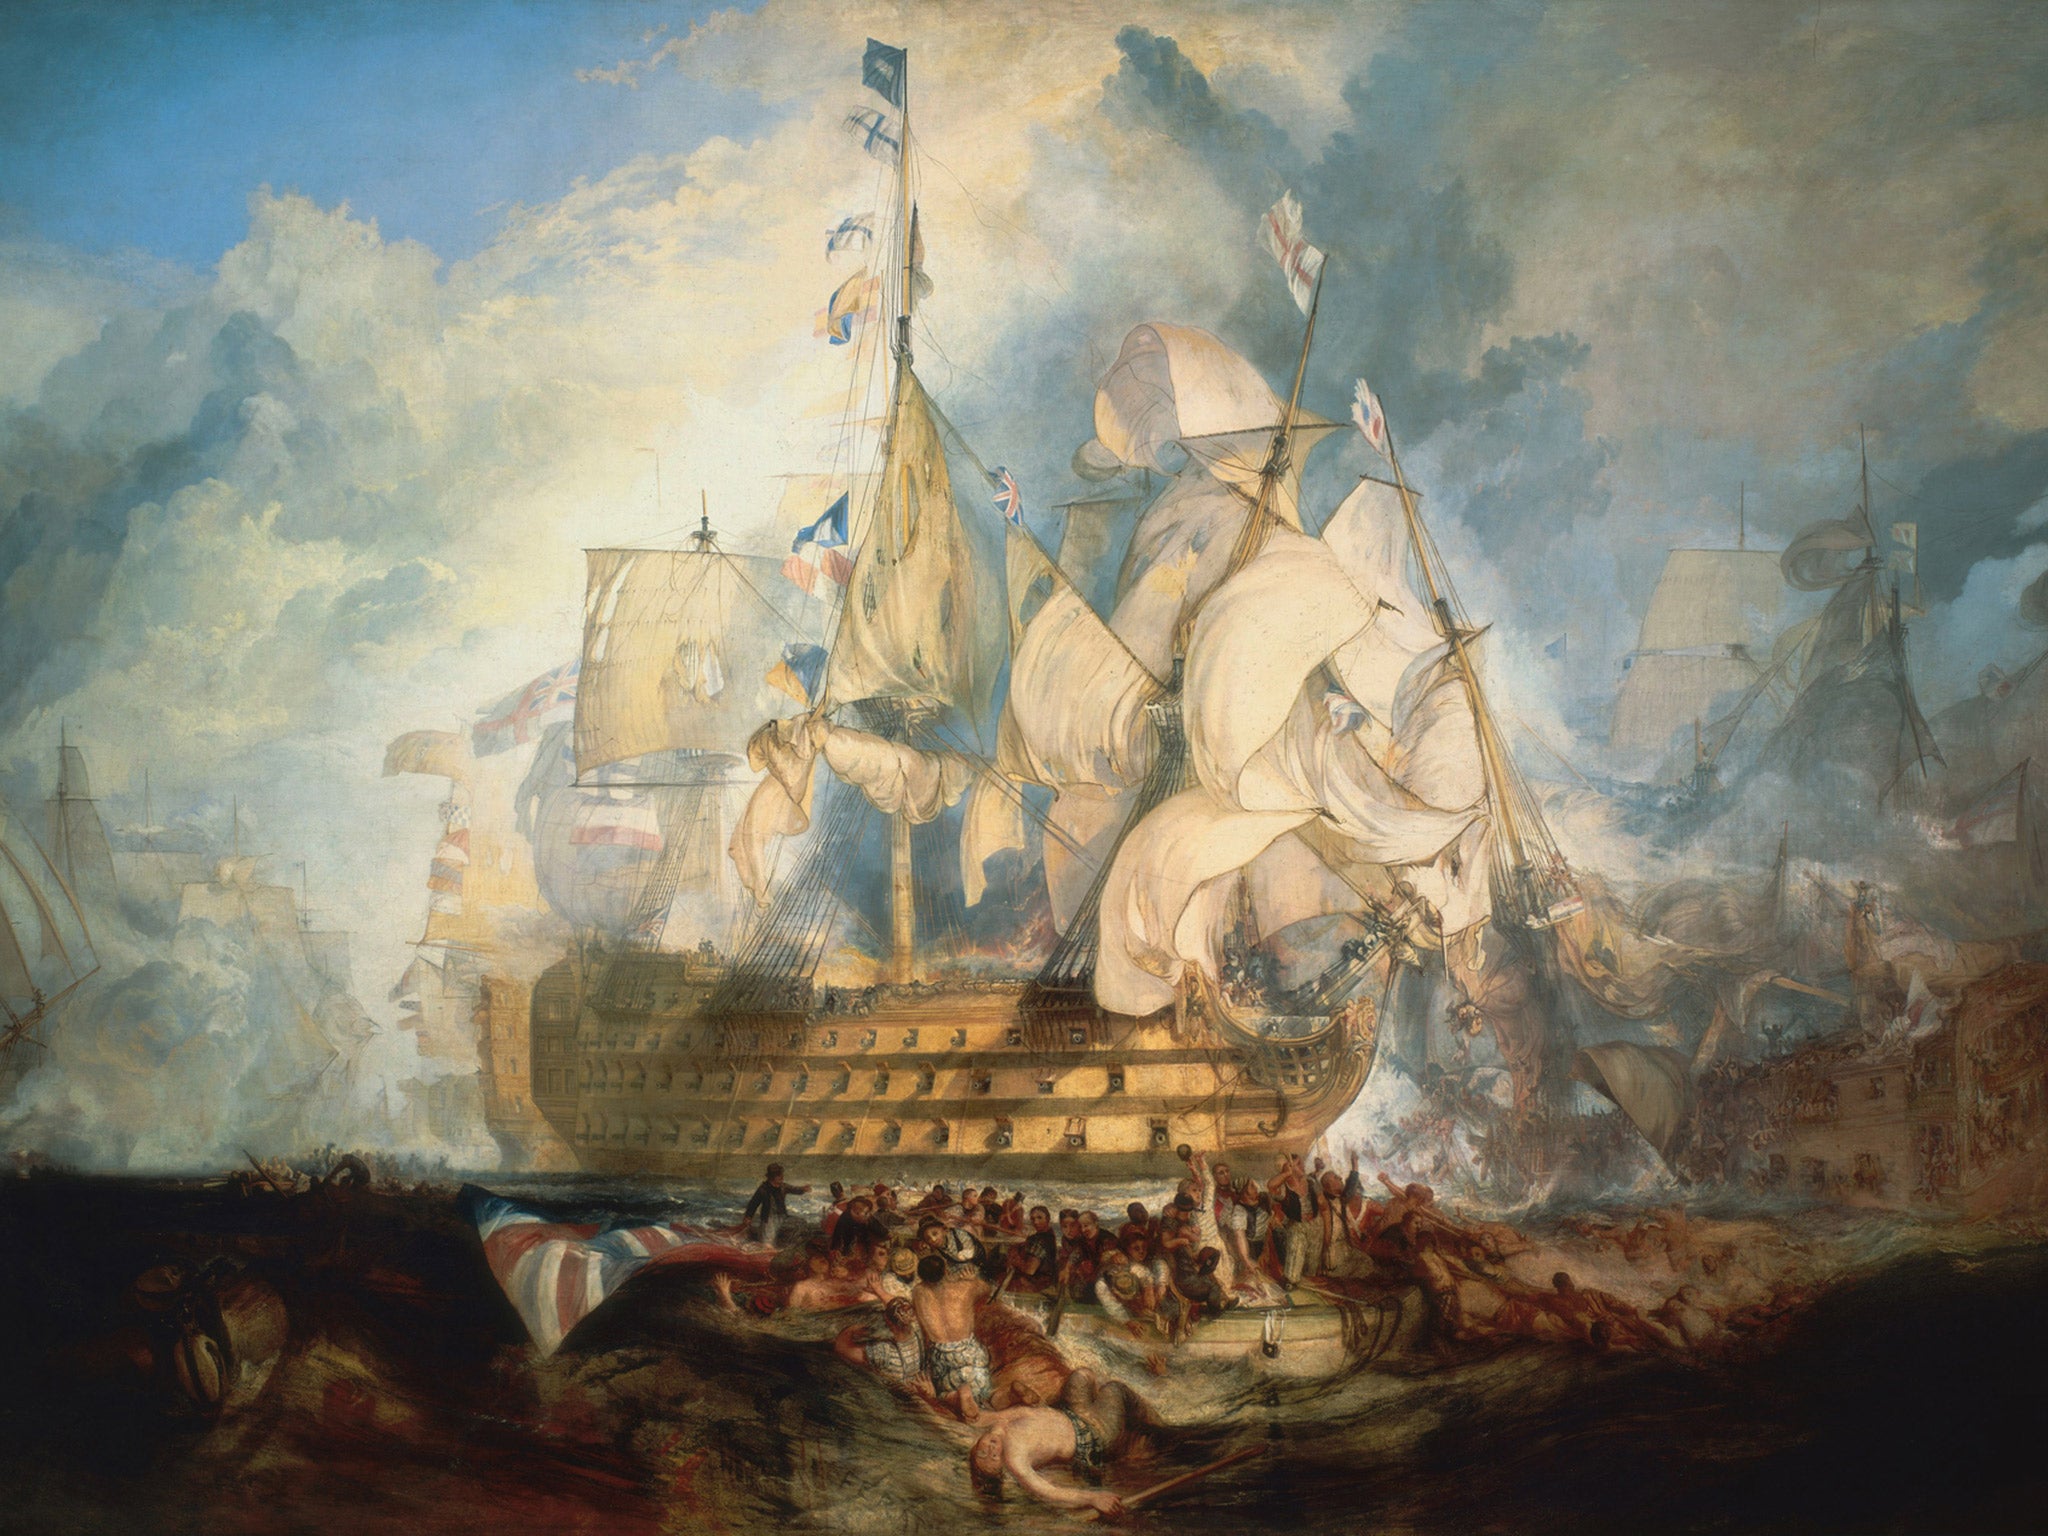 The Battle of Trafalgar as depicted by J. M. W. Turner